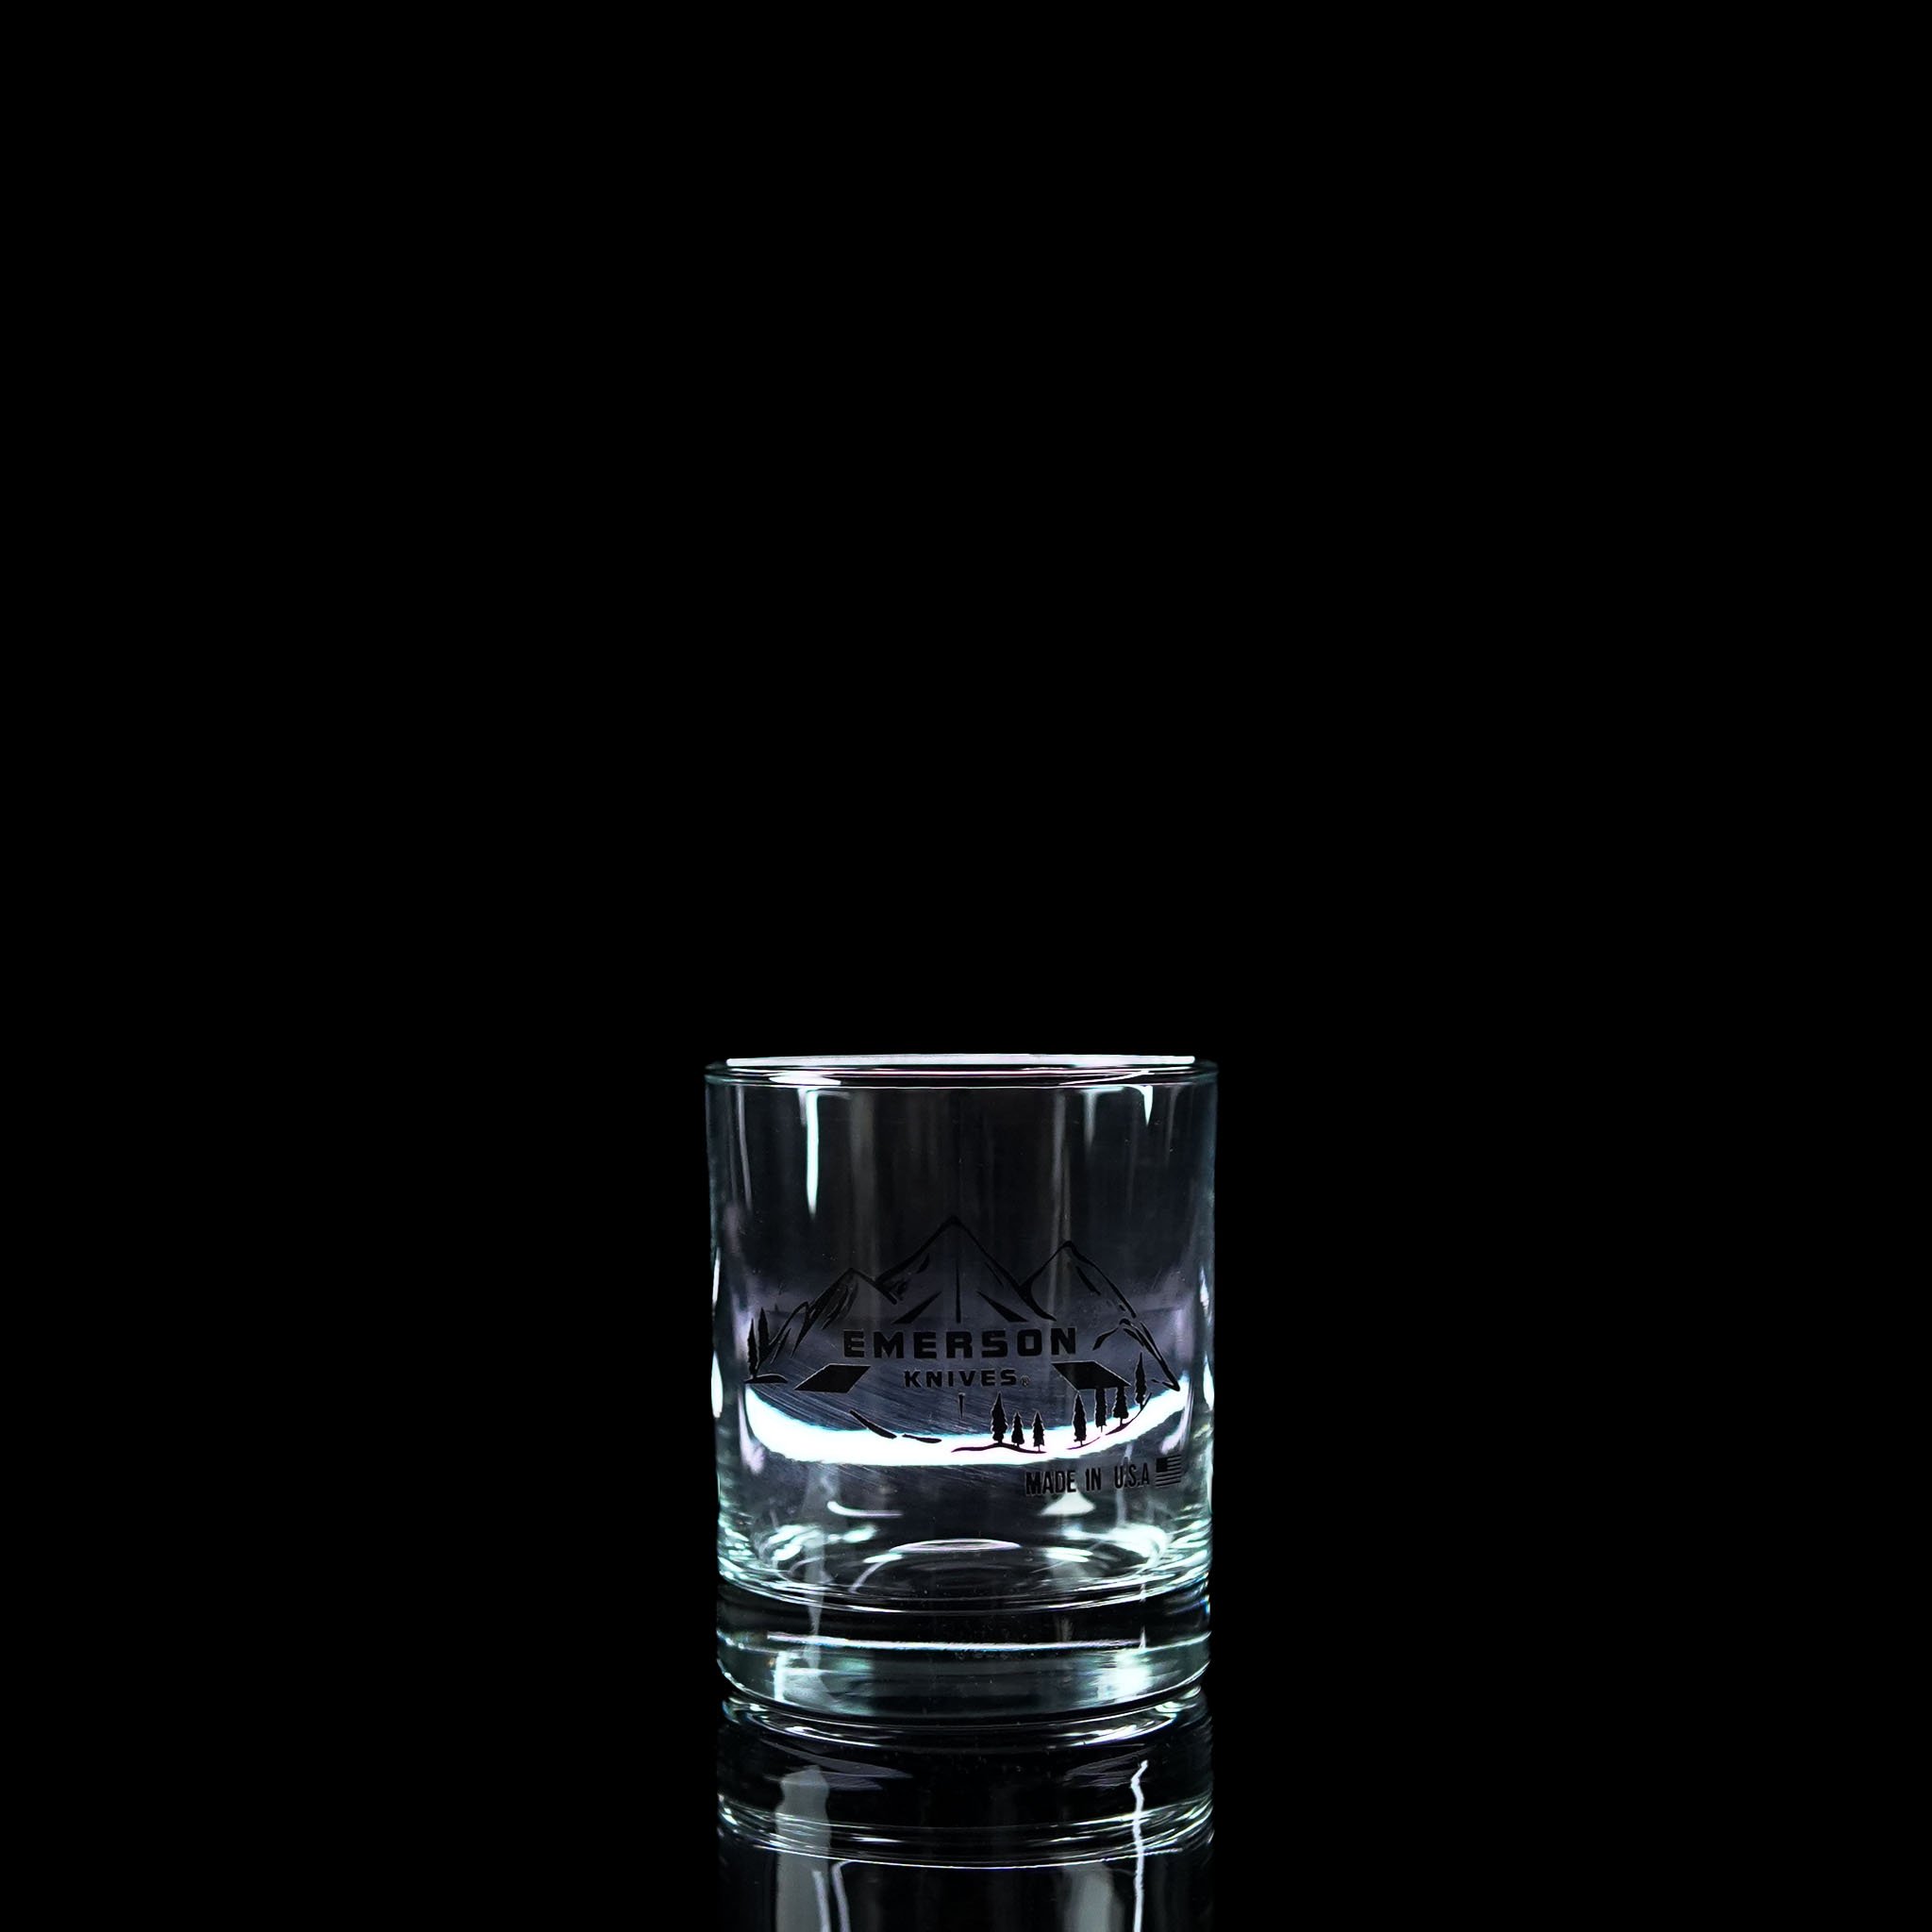 Emerson 3.0 Whiskey Glass